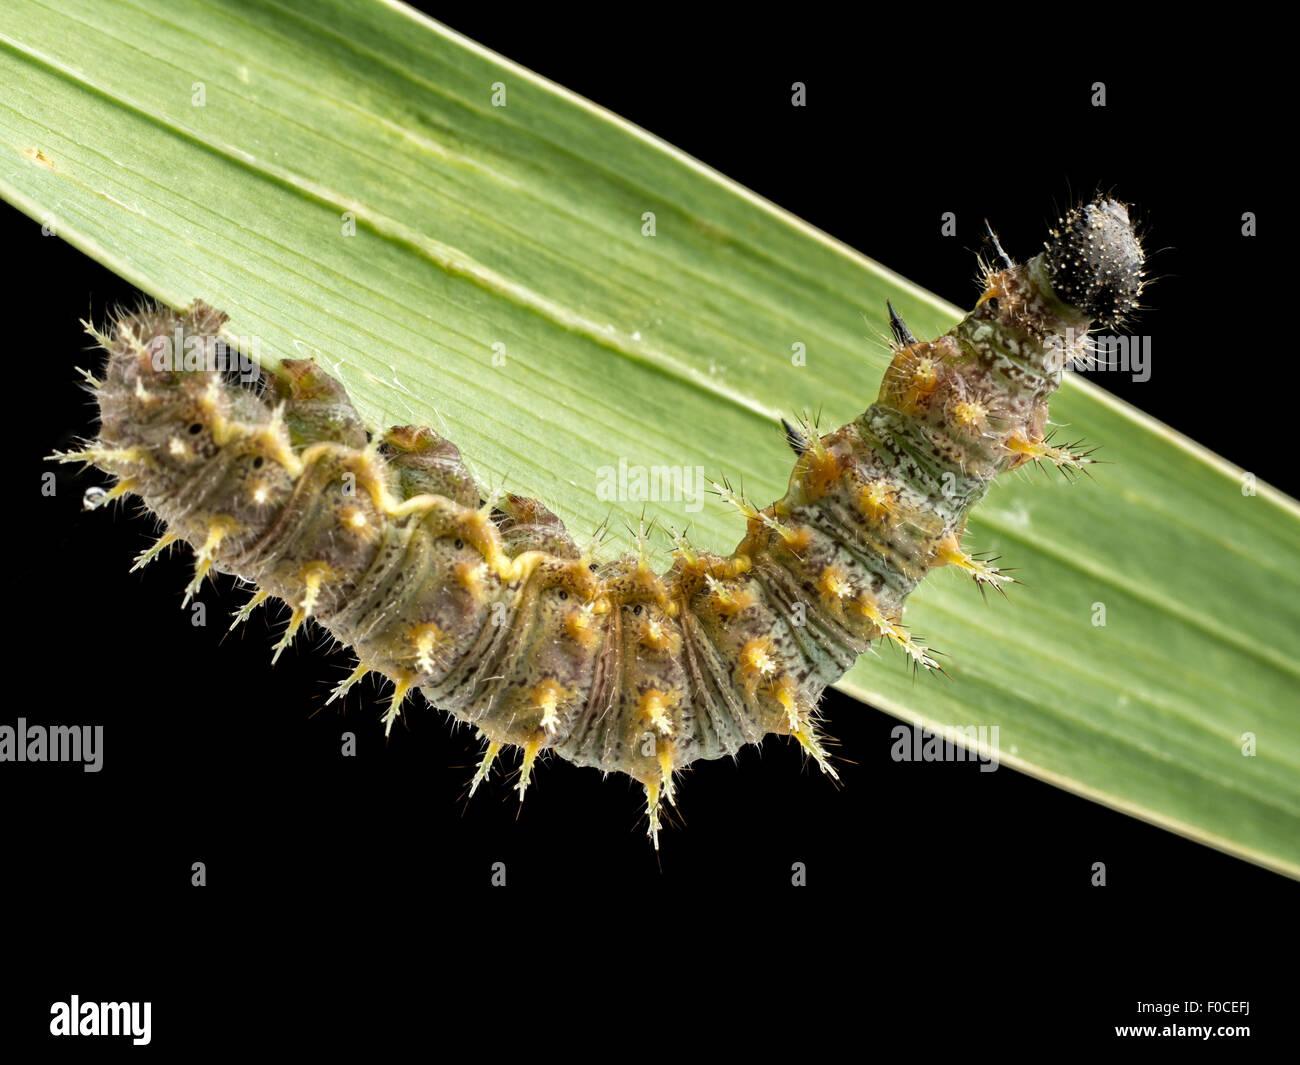 Caterpillar crawling on green leaf on black background Stock Photo